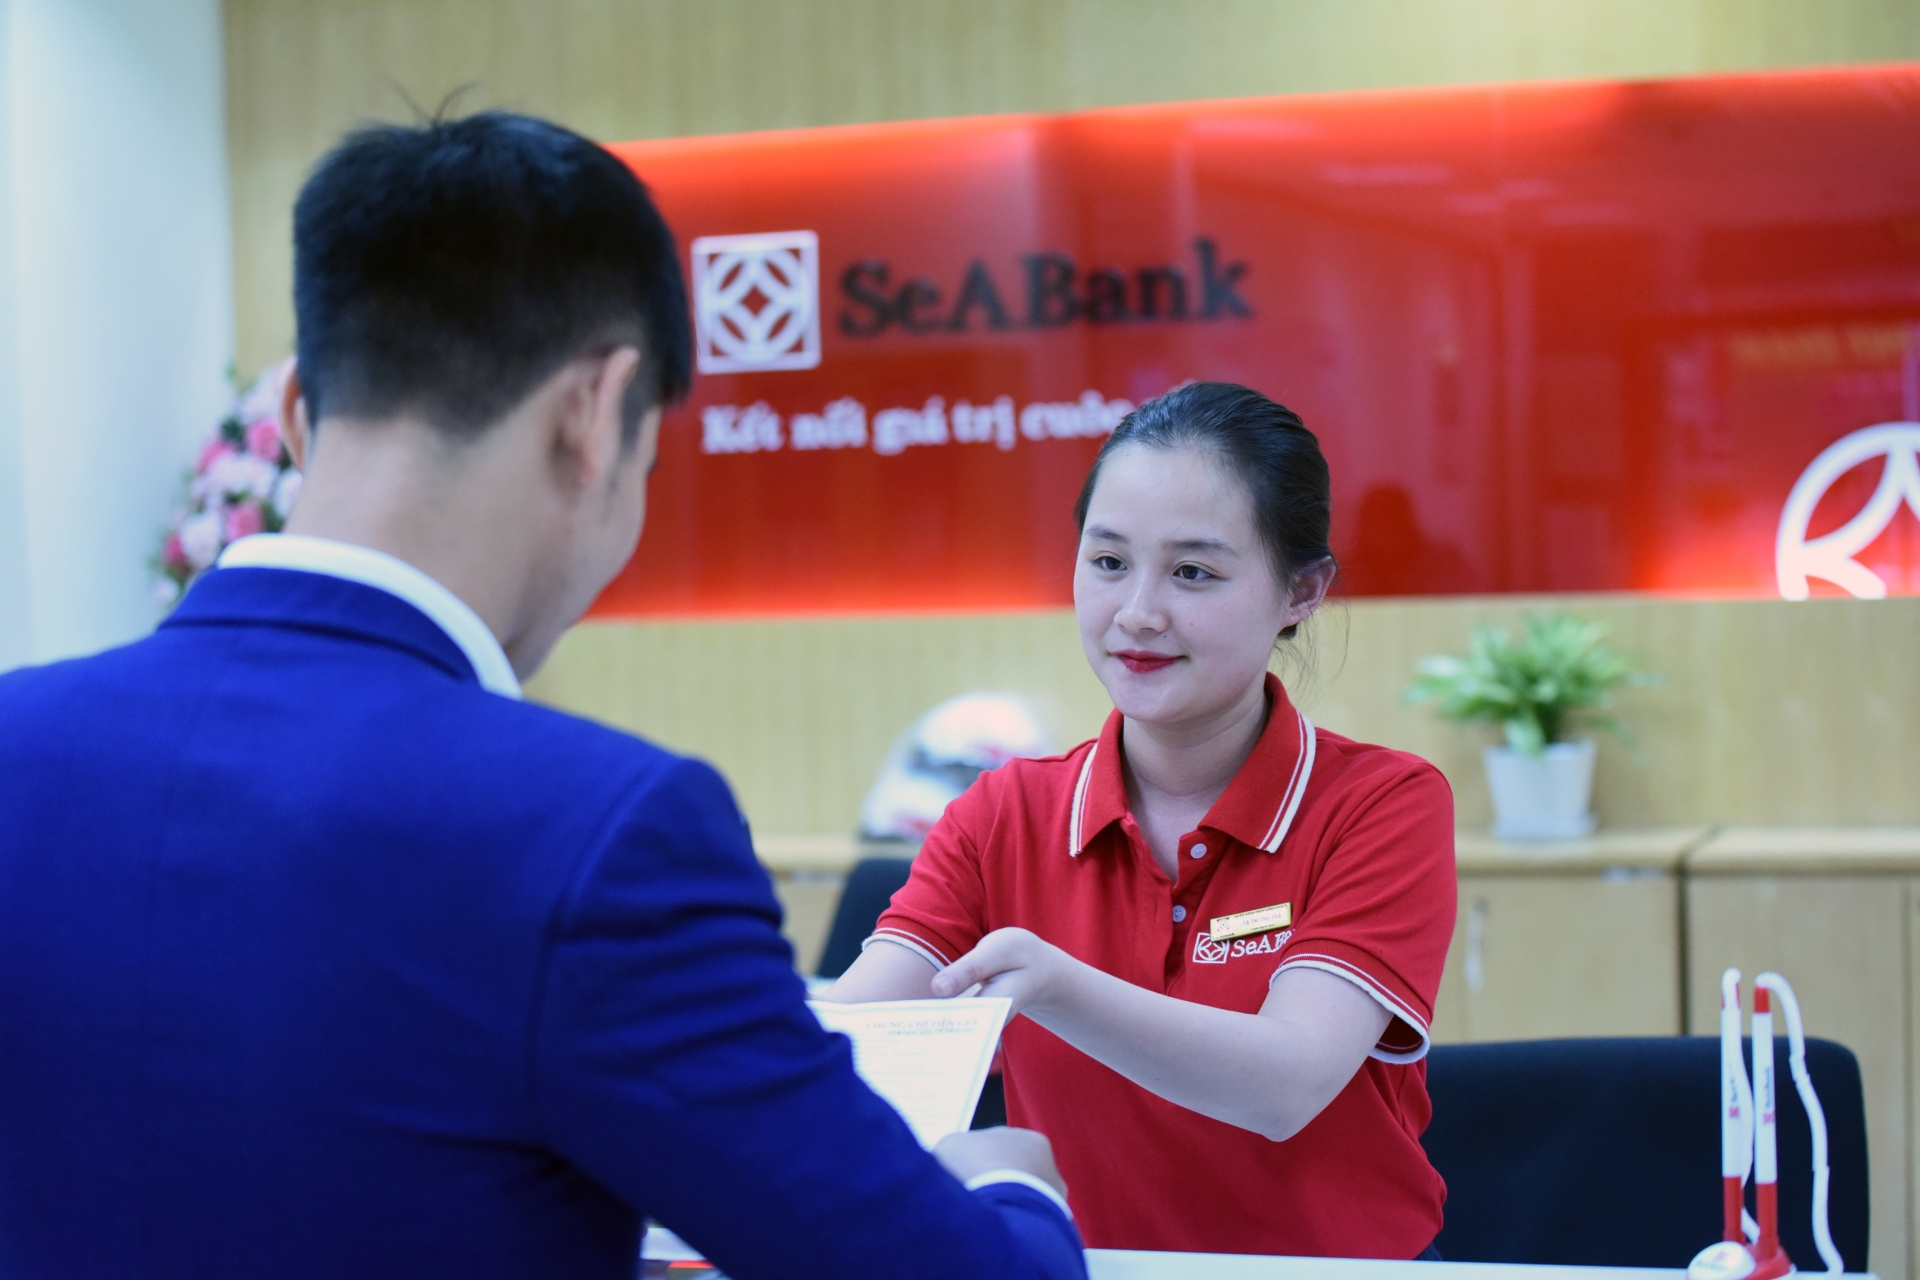 SeABank achieves impressive pre-tax profit growth in 2019